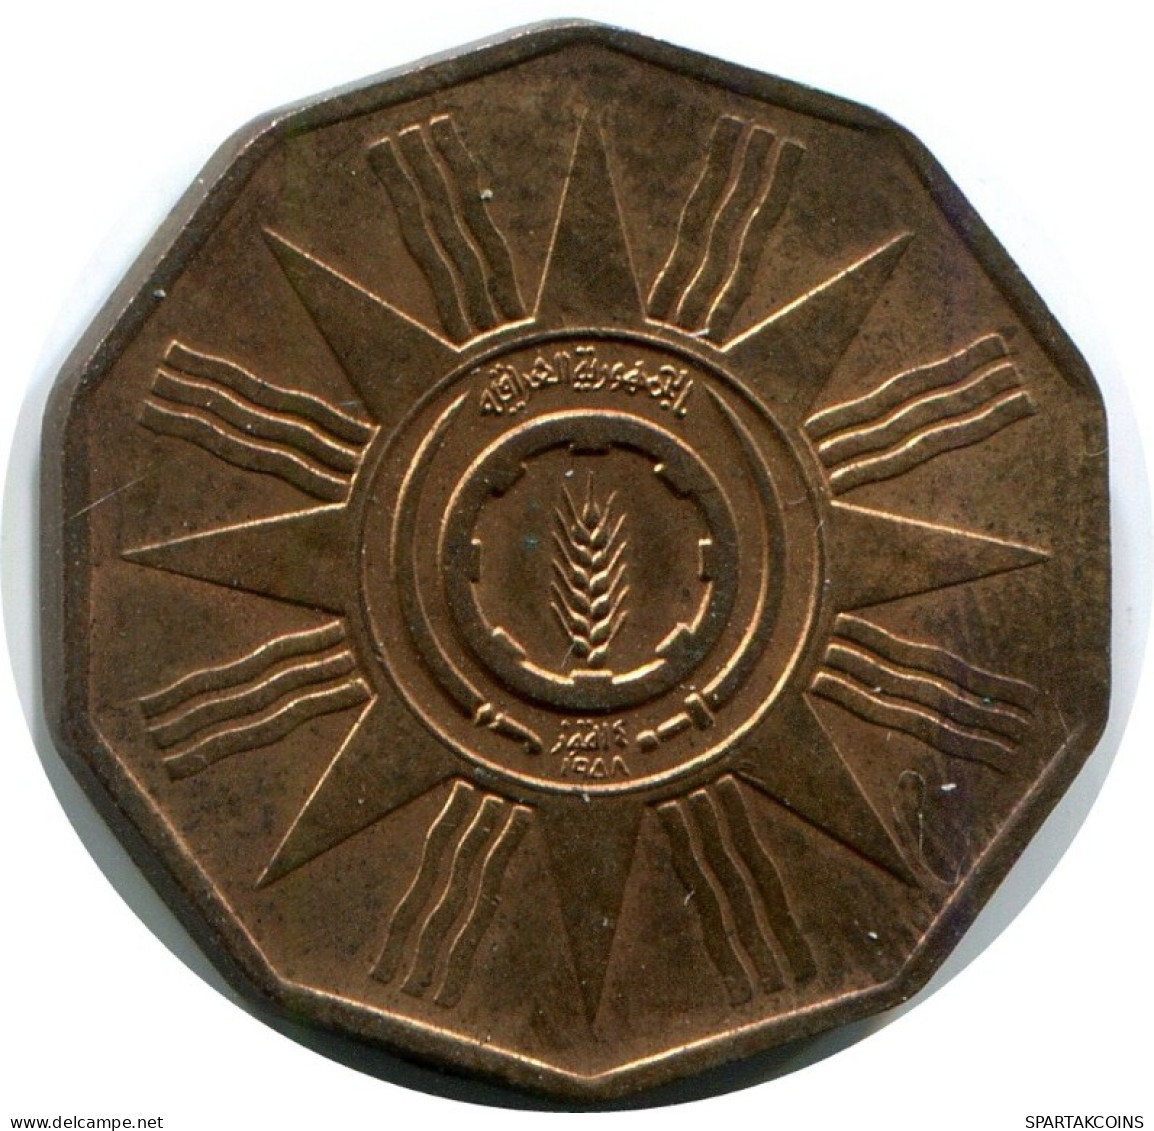 1 FILS 1959 IBAK IRAQ Islamisch Münze #AK262.D.A - Irak